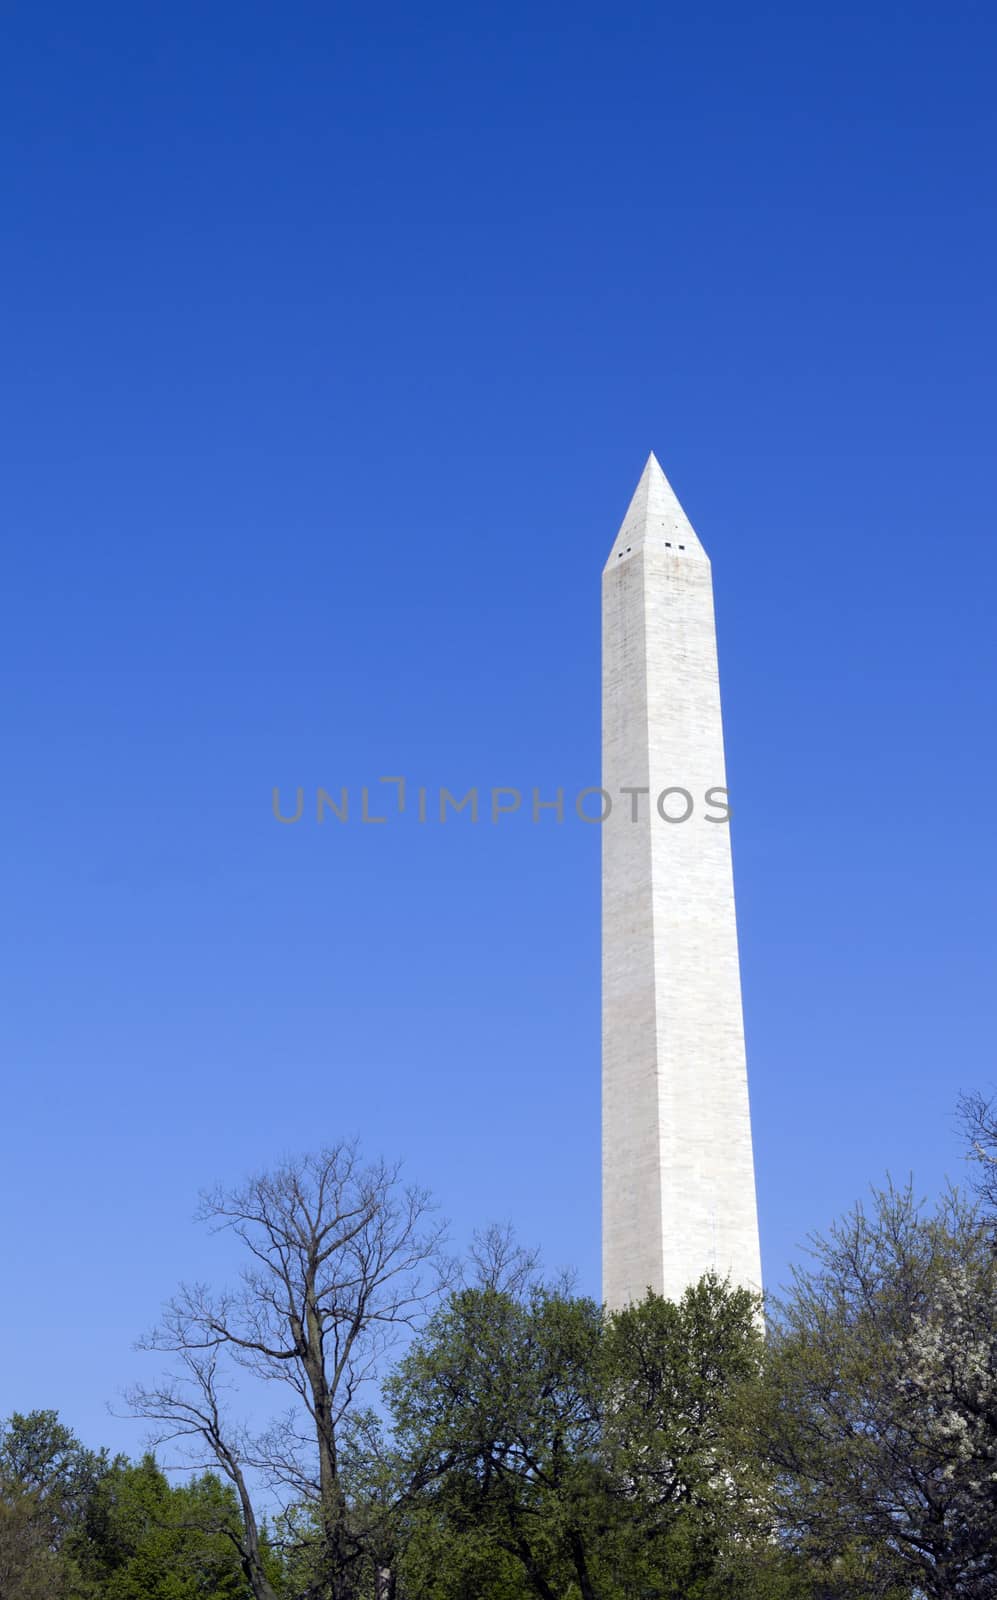 Washington Monument in Washington D.C. by Moonb007